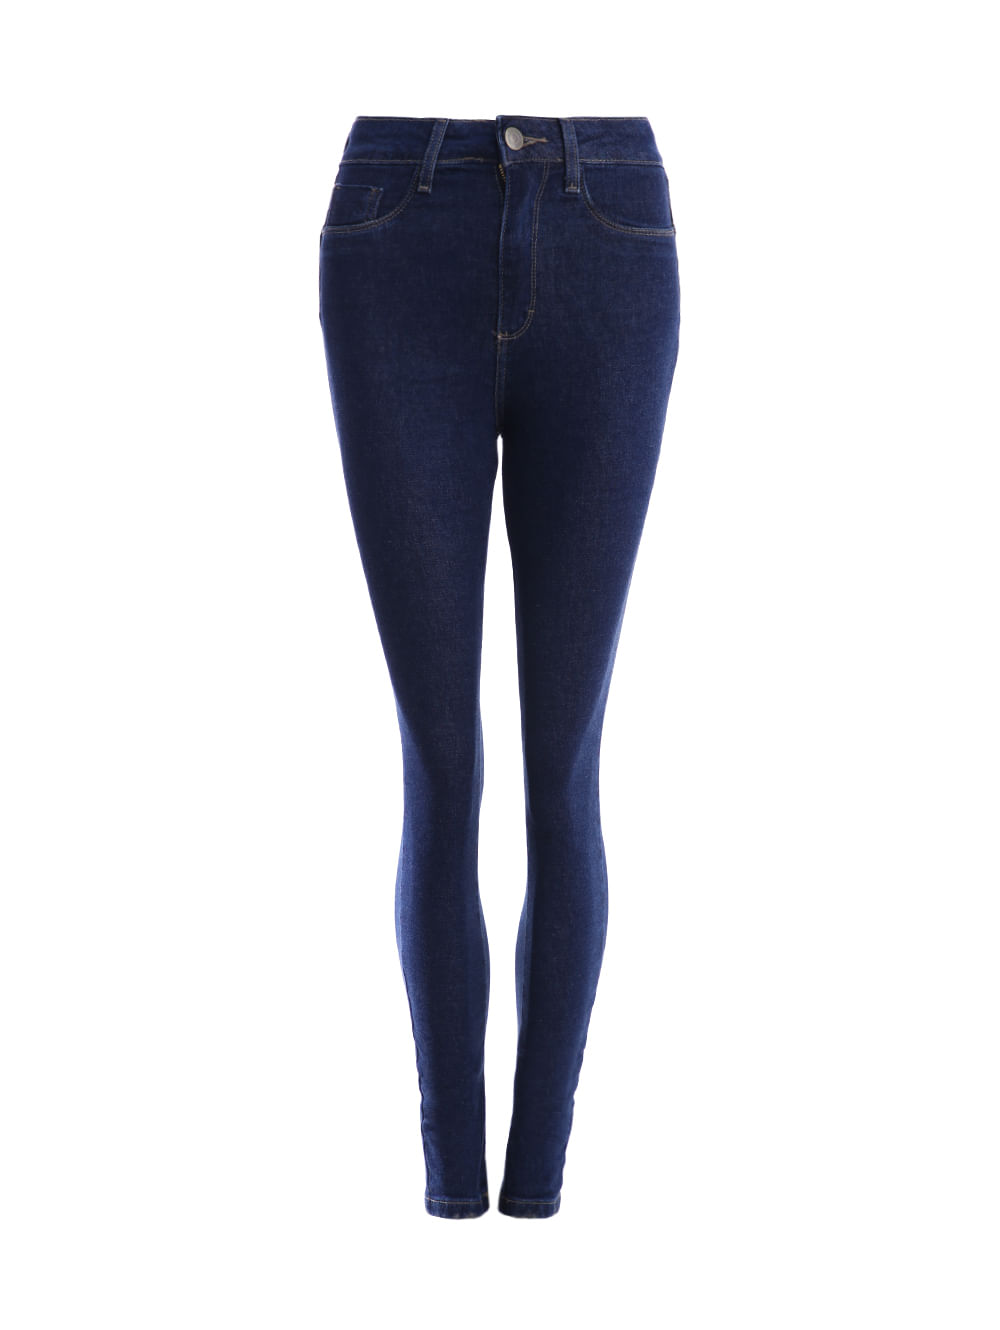 Jeans High Waist With Super Lipo Spandex  High jeans, High waist jeans,  Women jeans